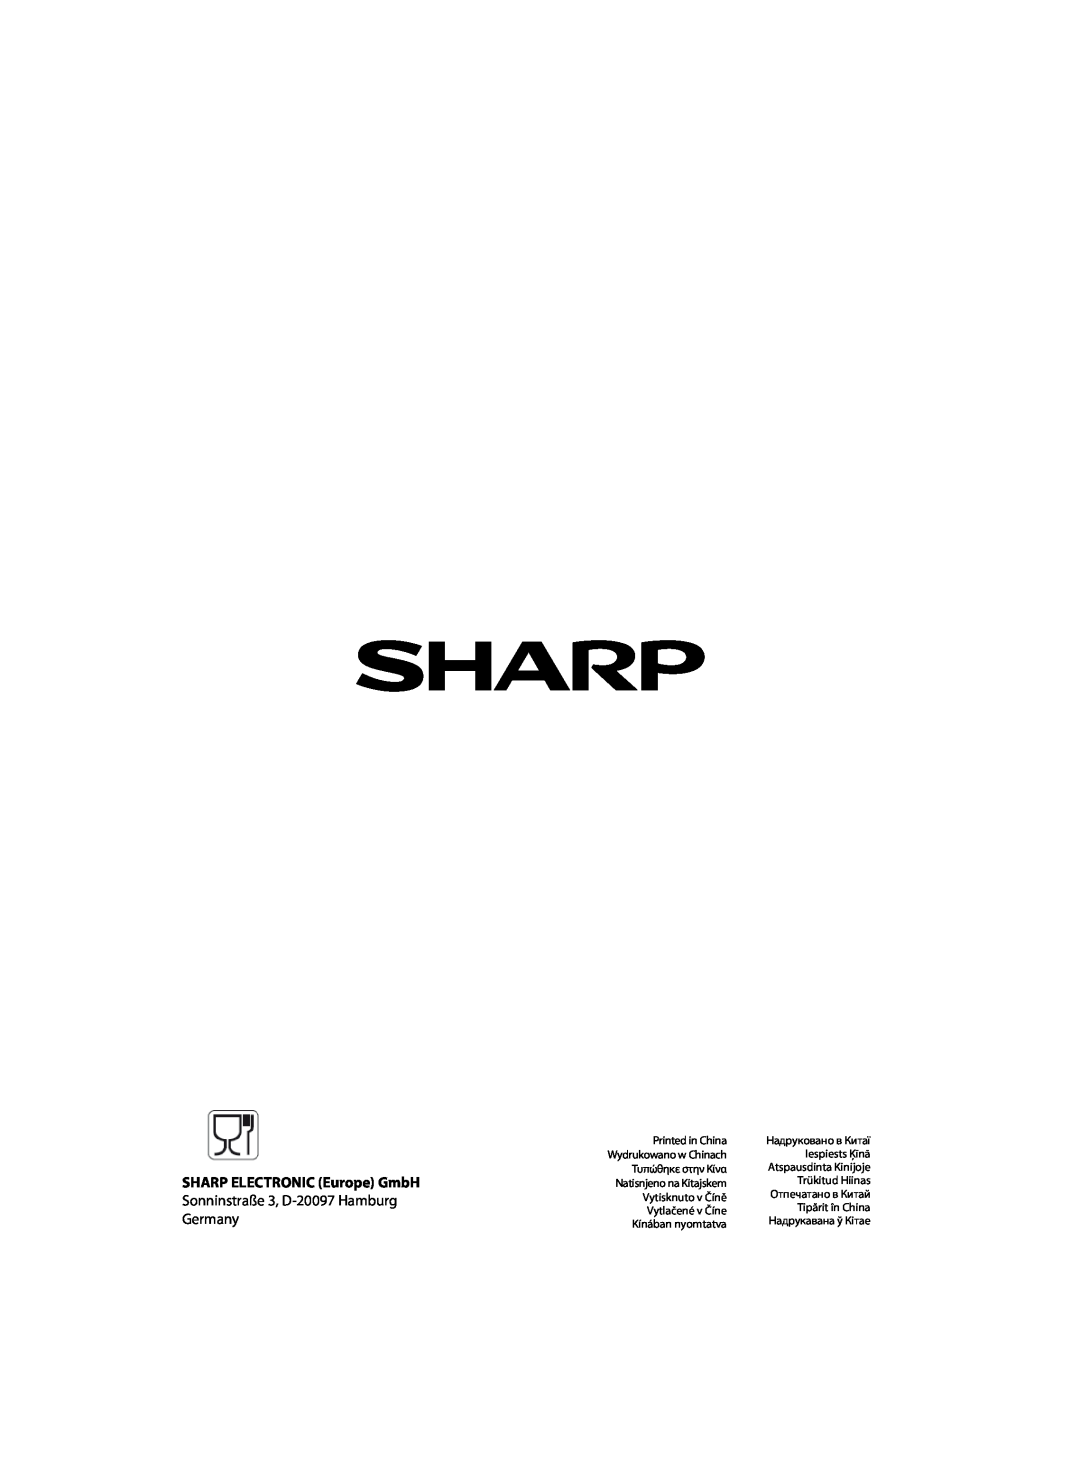 Sharp R-63ST operation manual SHARP ELECTRONIC Europe GmbH, Sonninstraße 3, D-20097Hamburg, Germany 